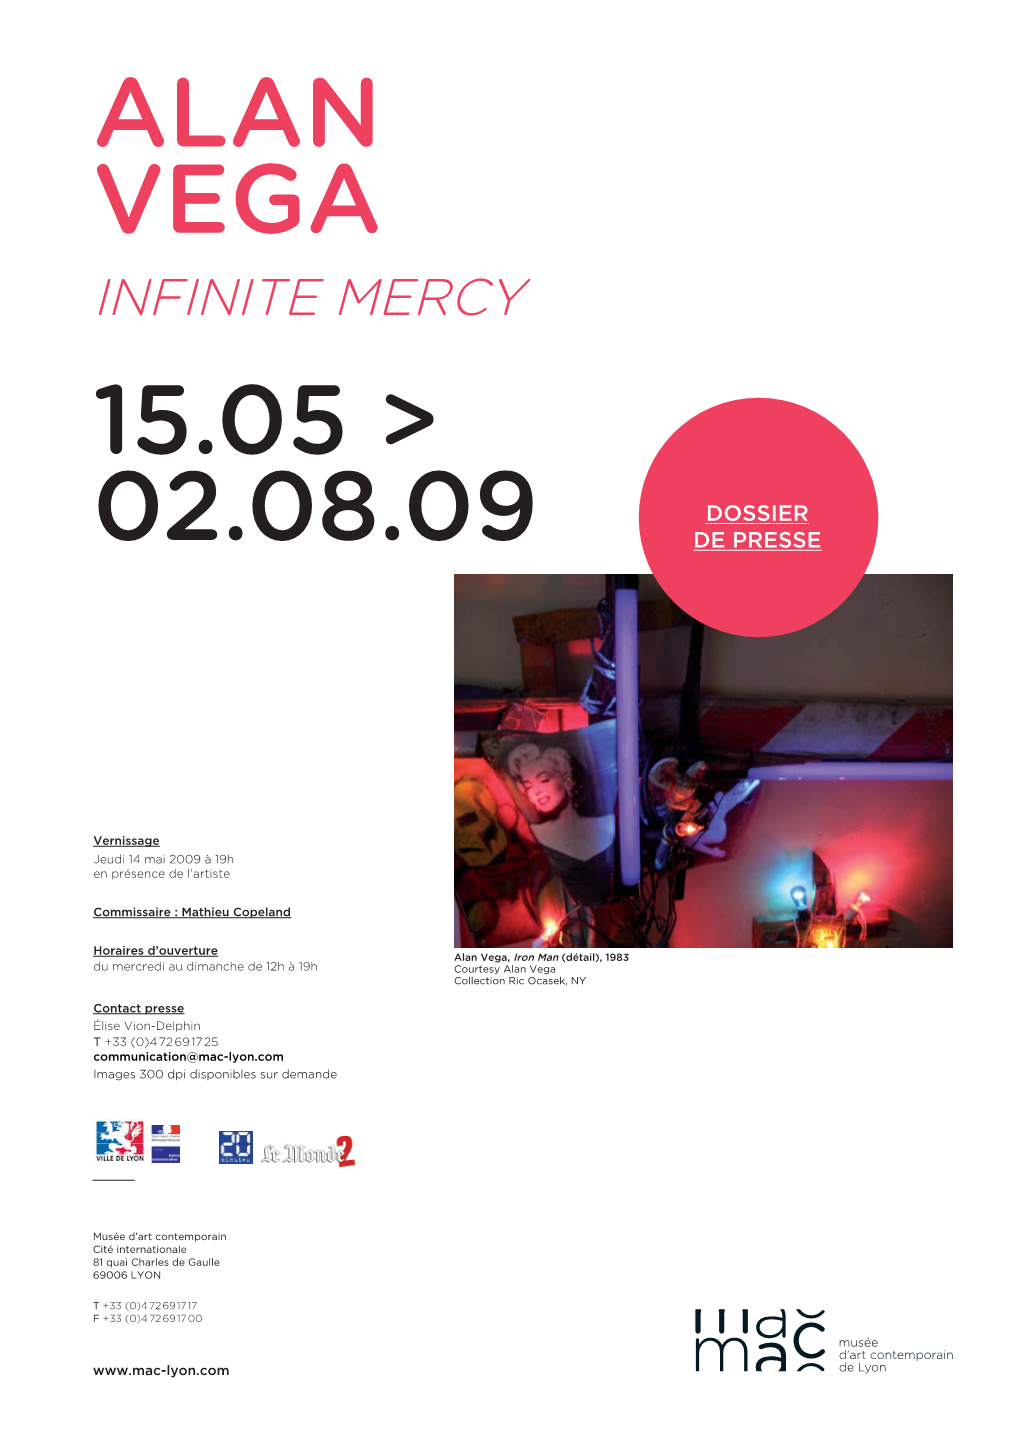 Alan Vega Infinite Mercy 15.05 >